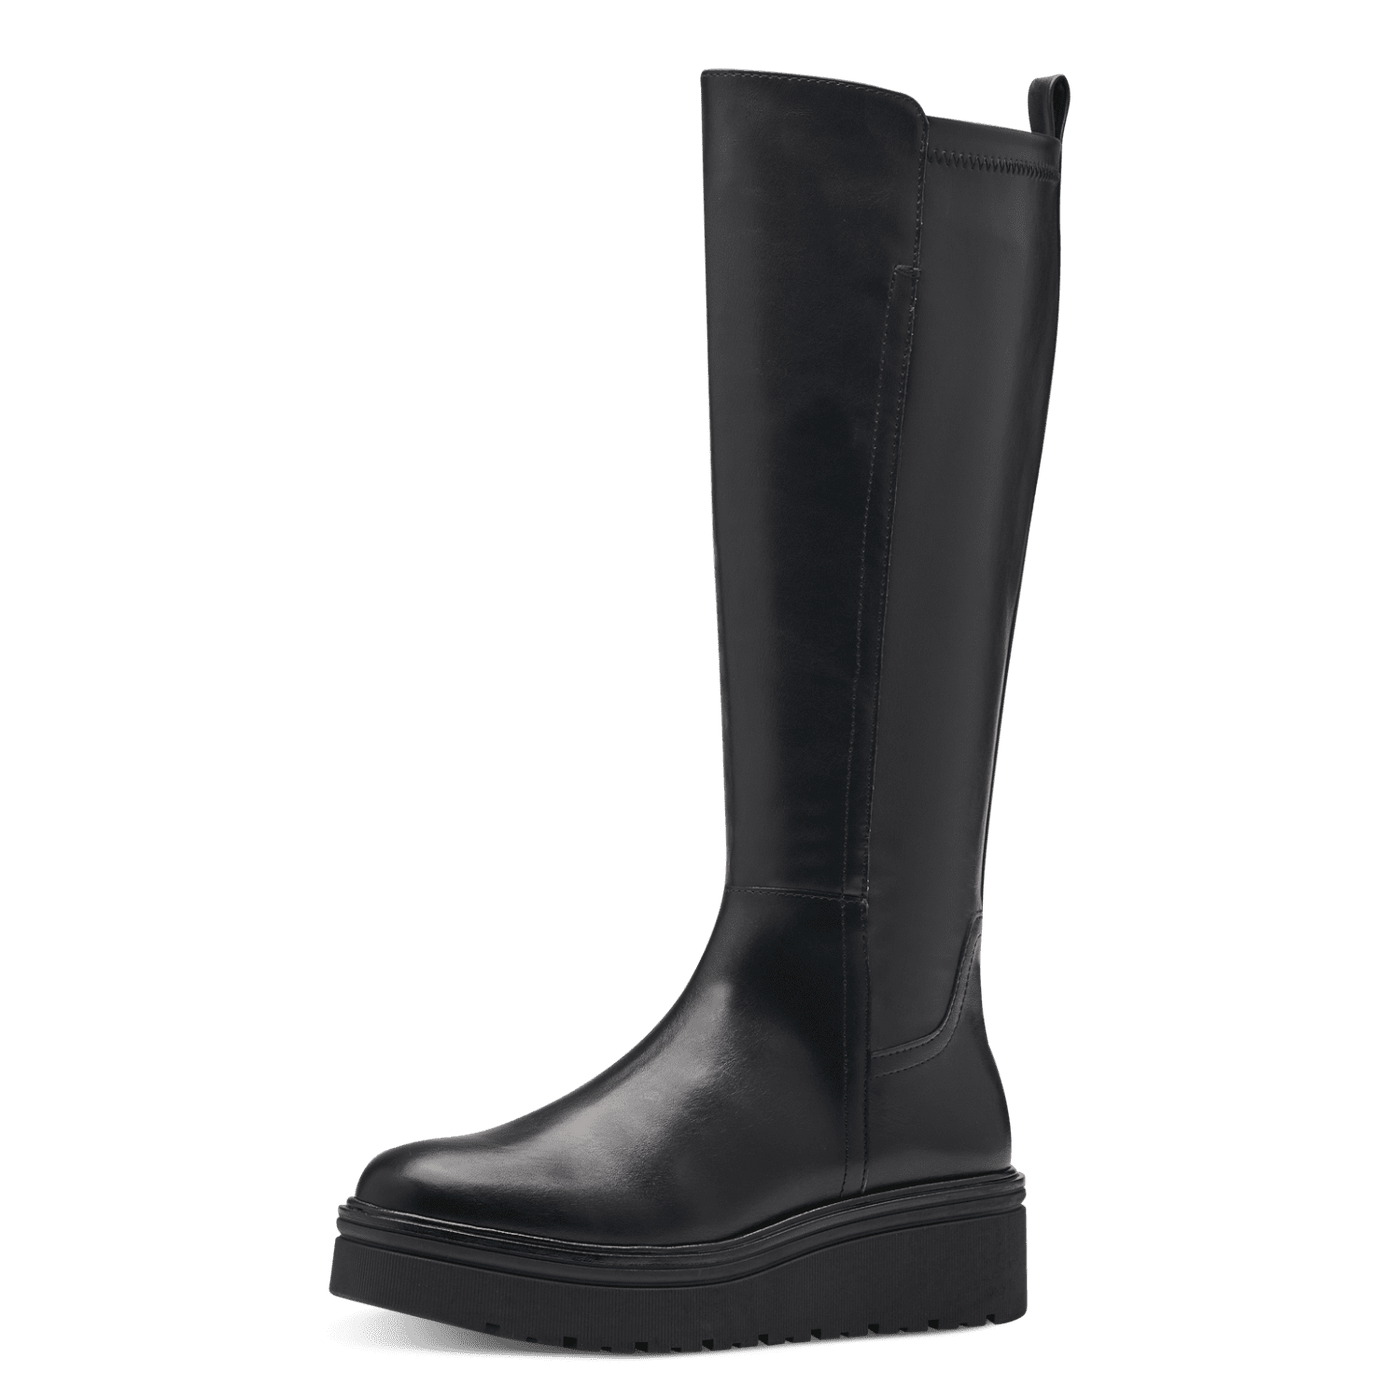 Marco Tozzi black boots